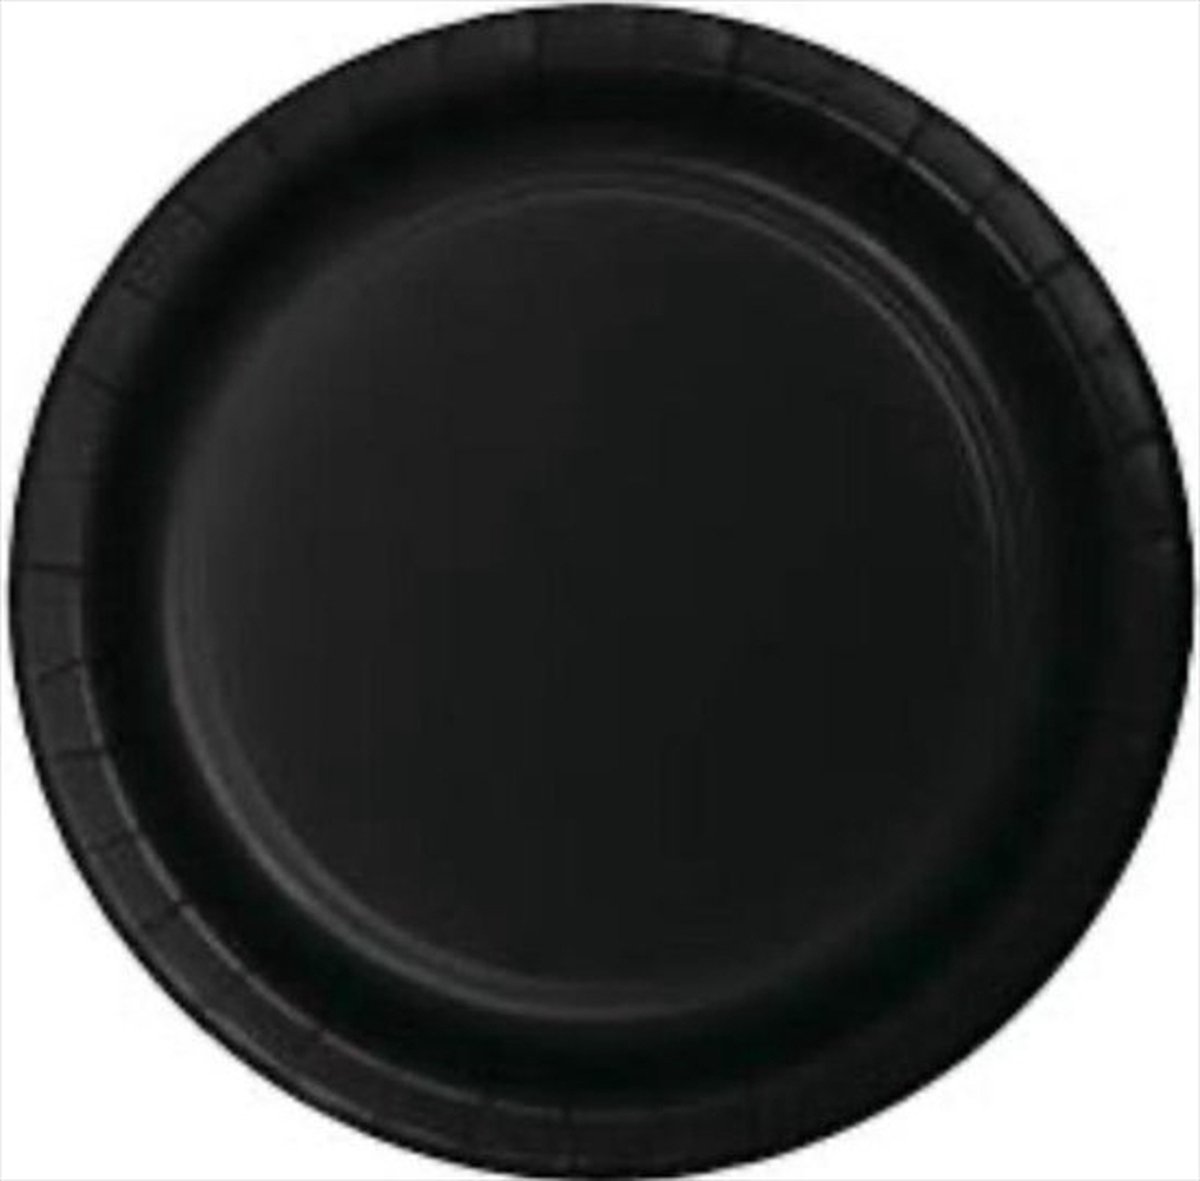 Kartonnen Bordjes zwart 23 cm 20 stuks - Wegwerp borden - Feest/verjaardag/BBQ borden